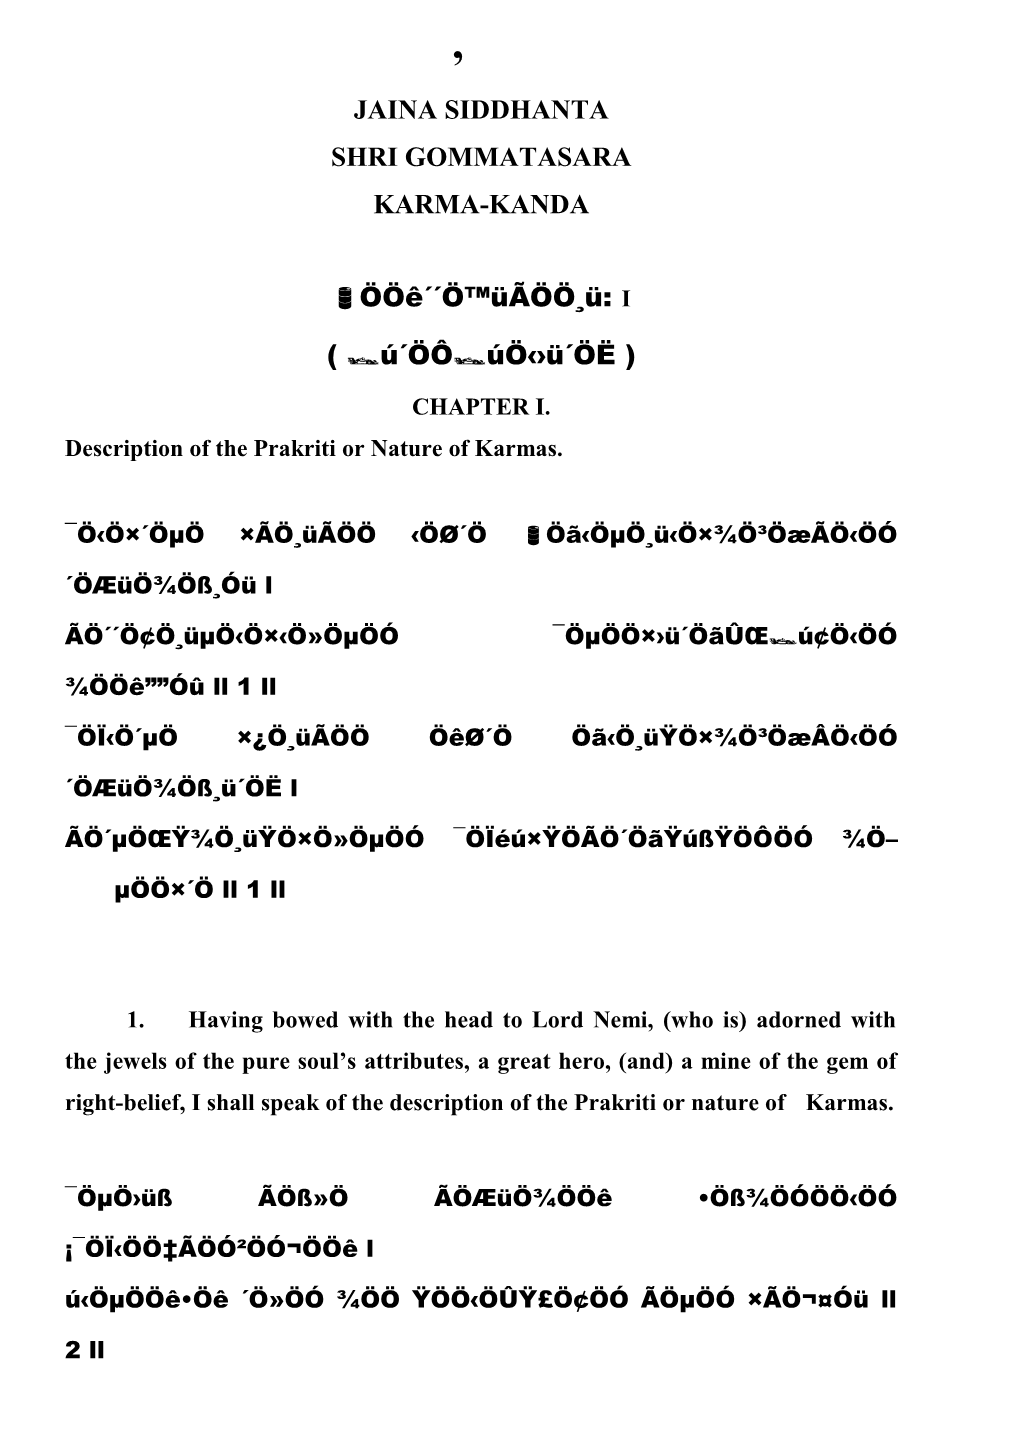 Description of the Prakriti Or Nature of Karmas